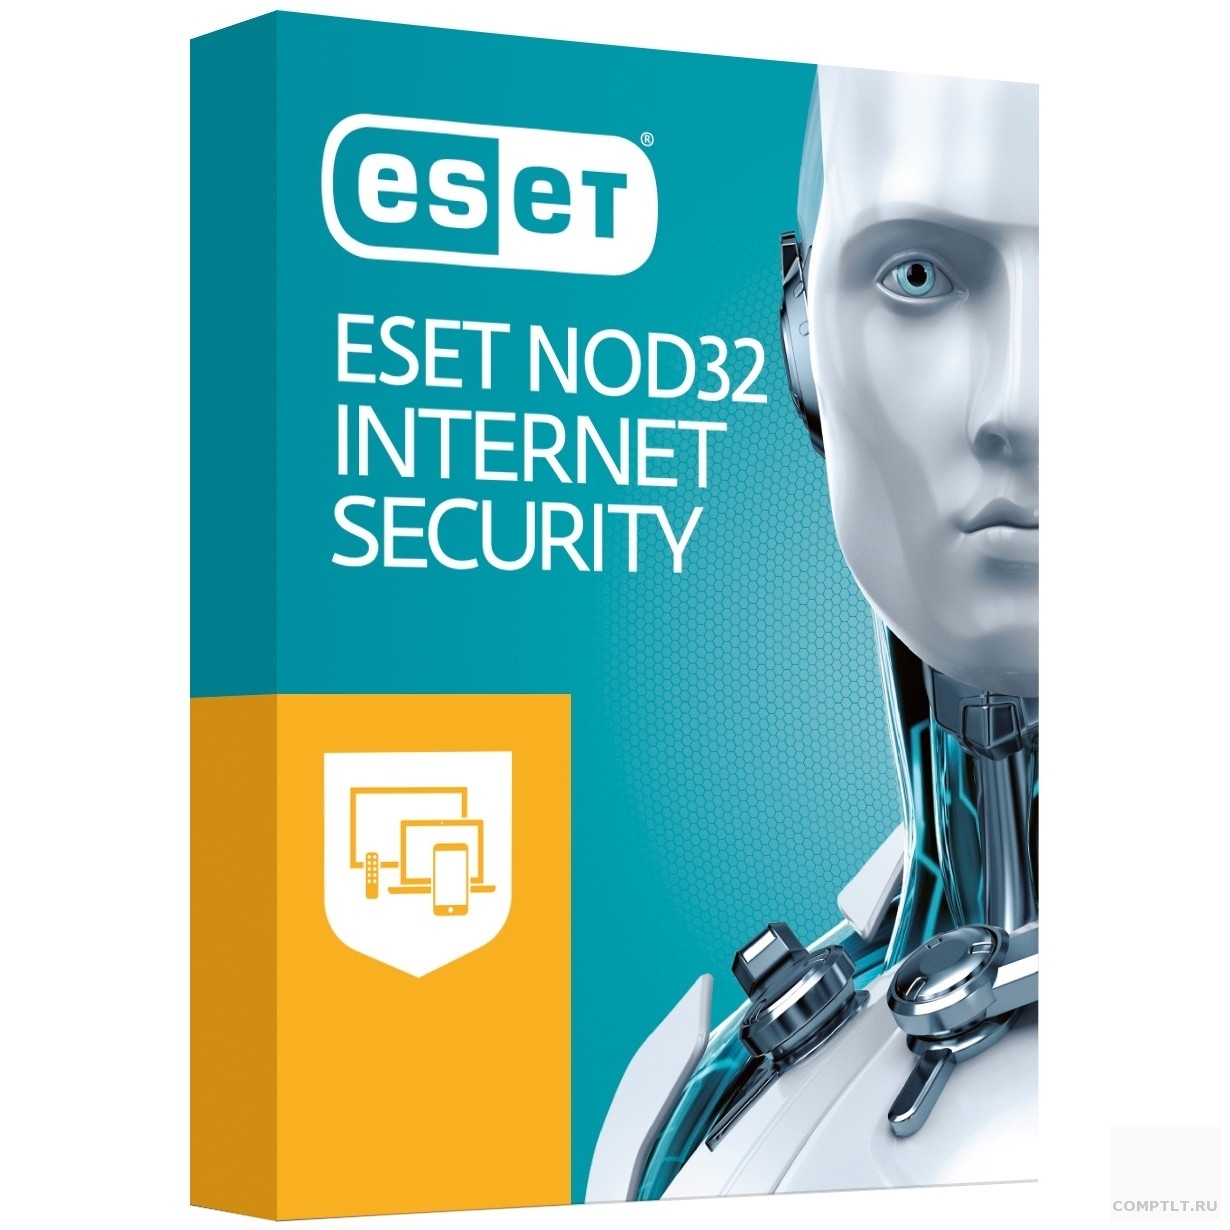 NOD32-EIS-NSBOX-2-3 ESET NOD32 Internet Security Platinum Edition  лицензия на 2 года на 3 устройства 311821